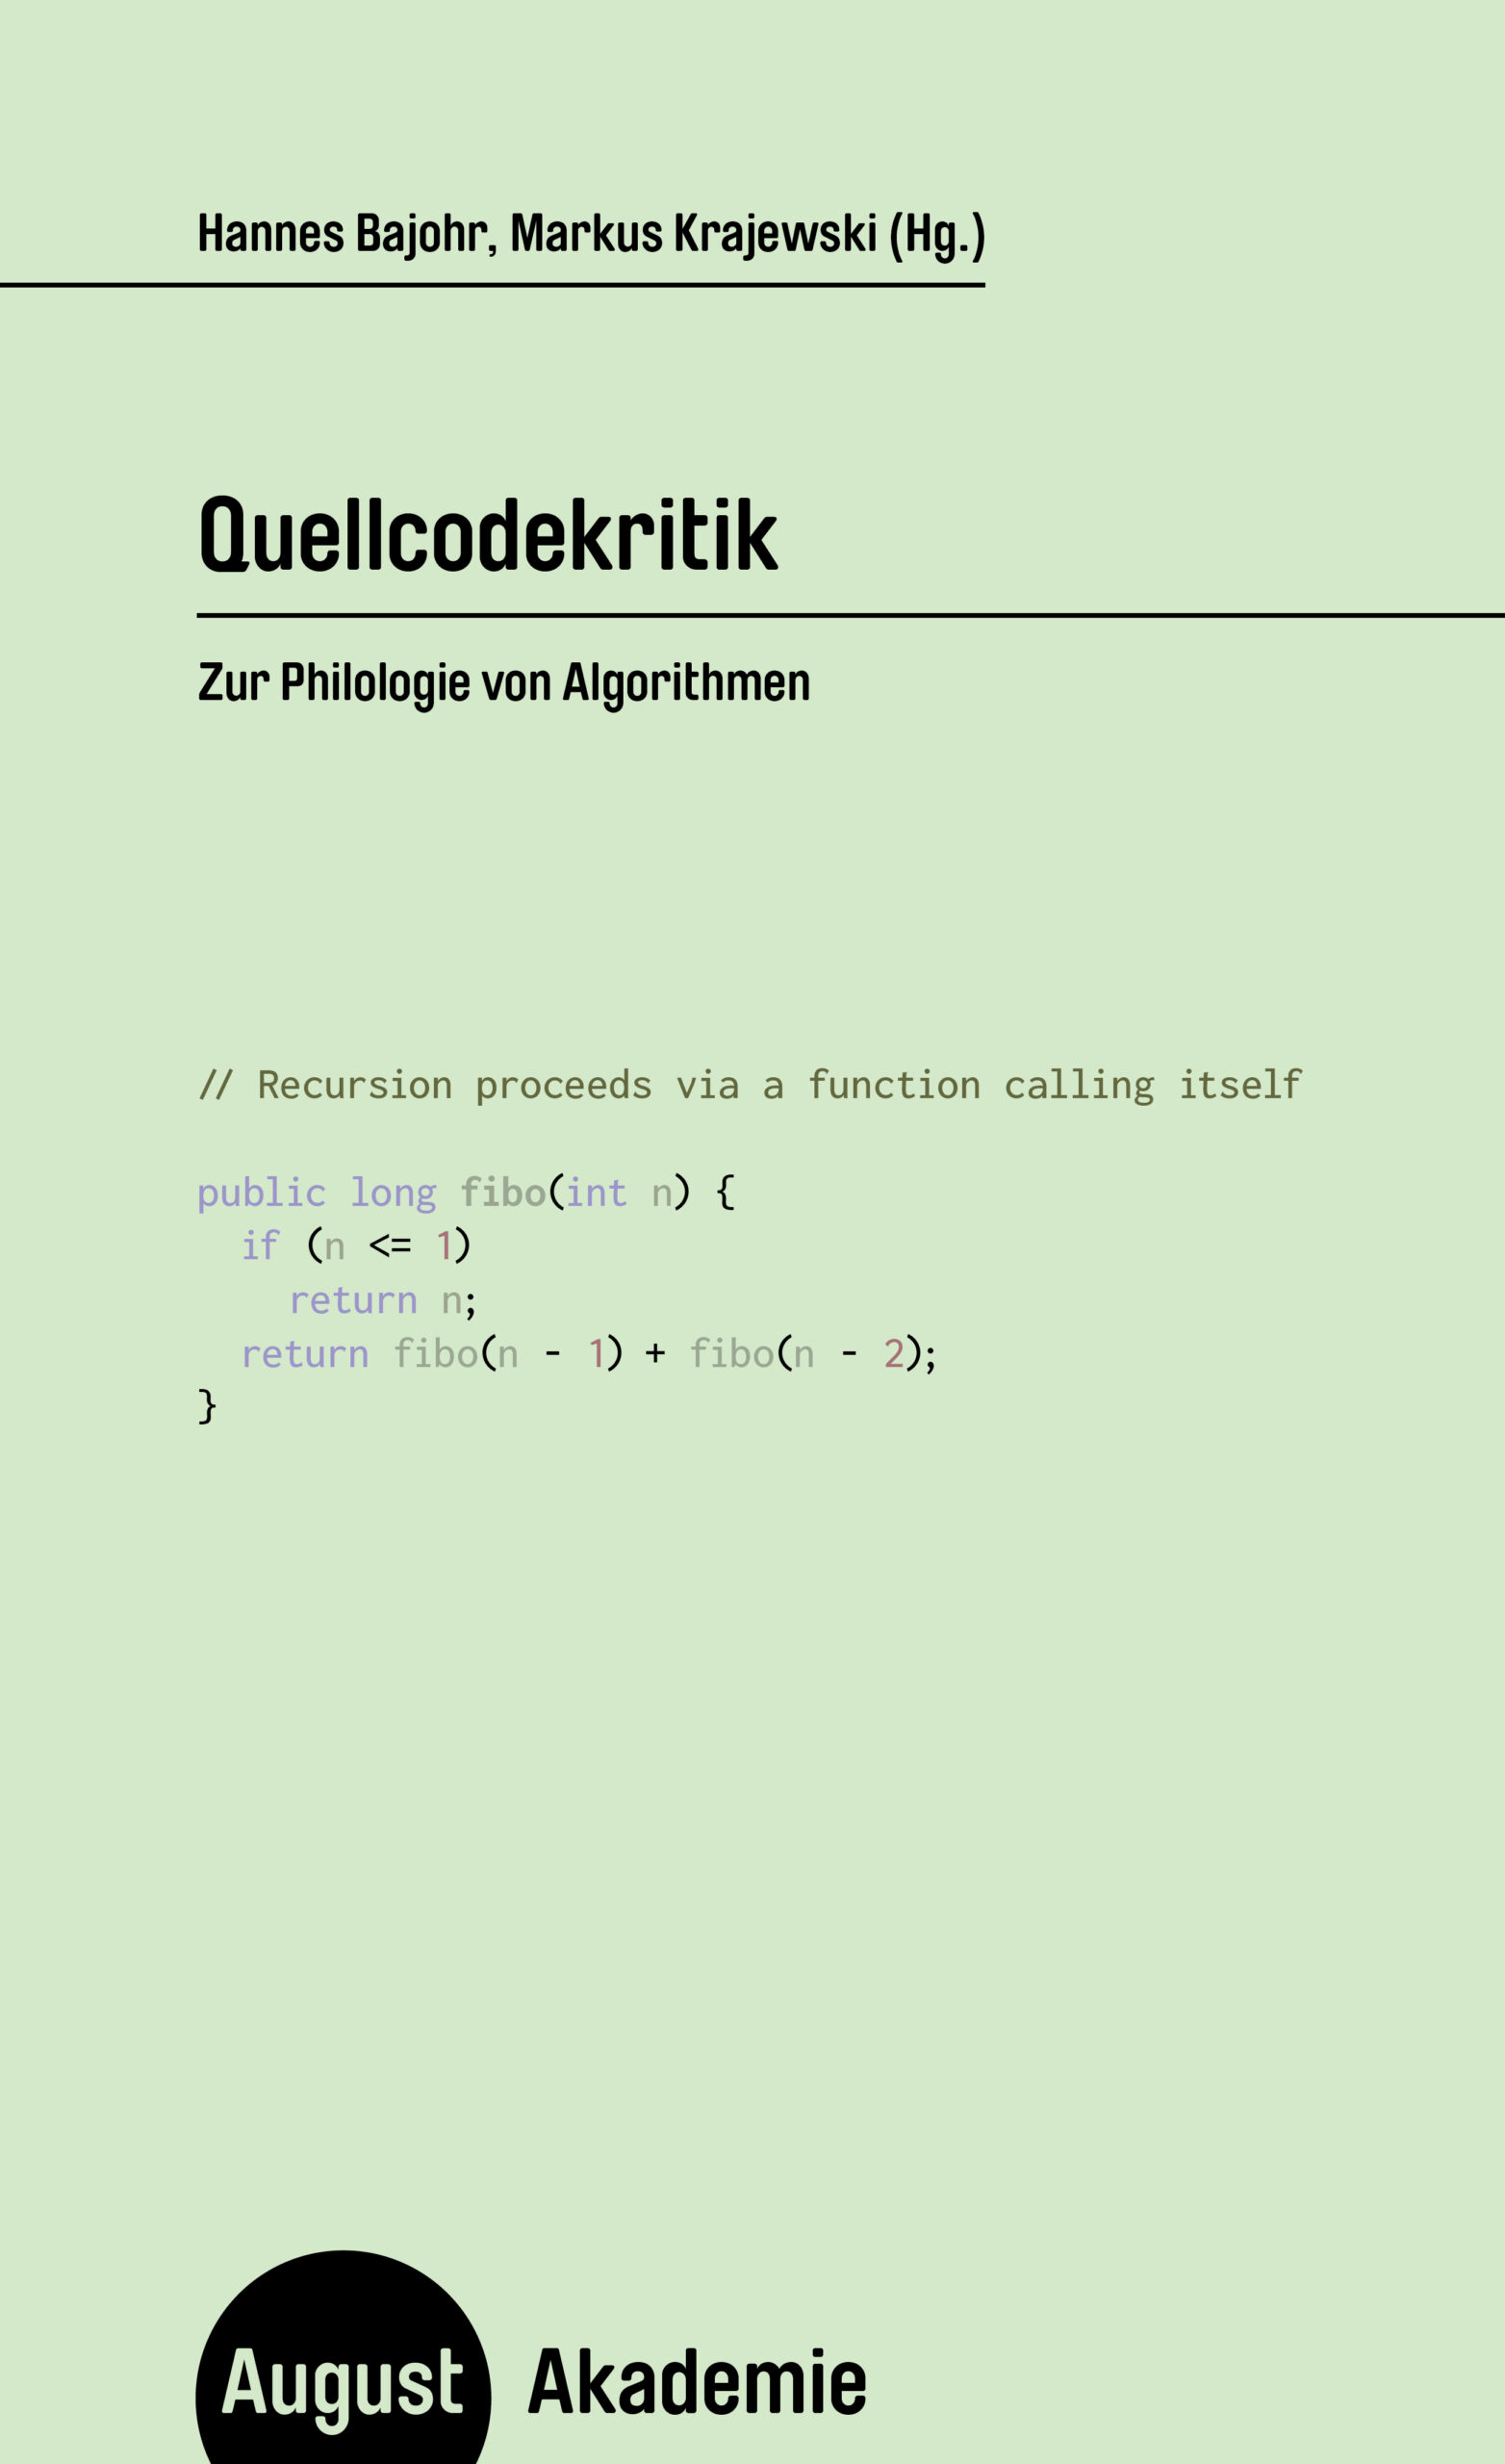 New volume: Quellcodekritik